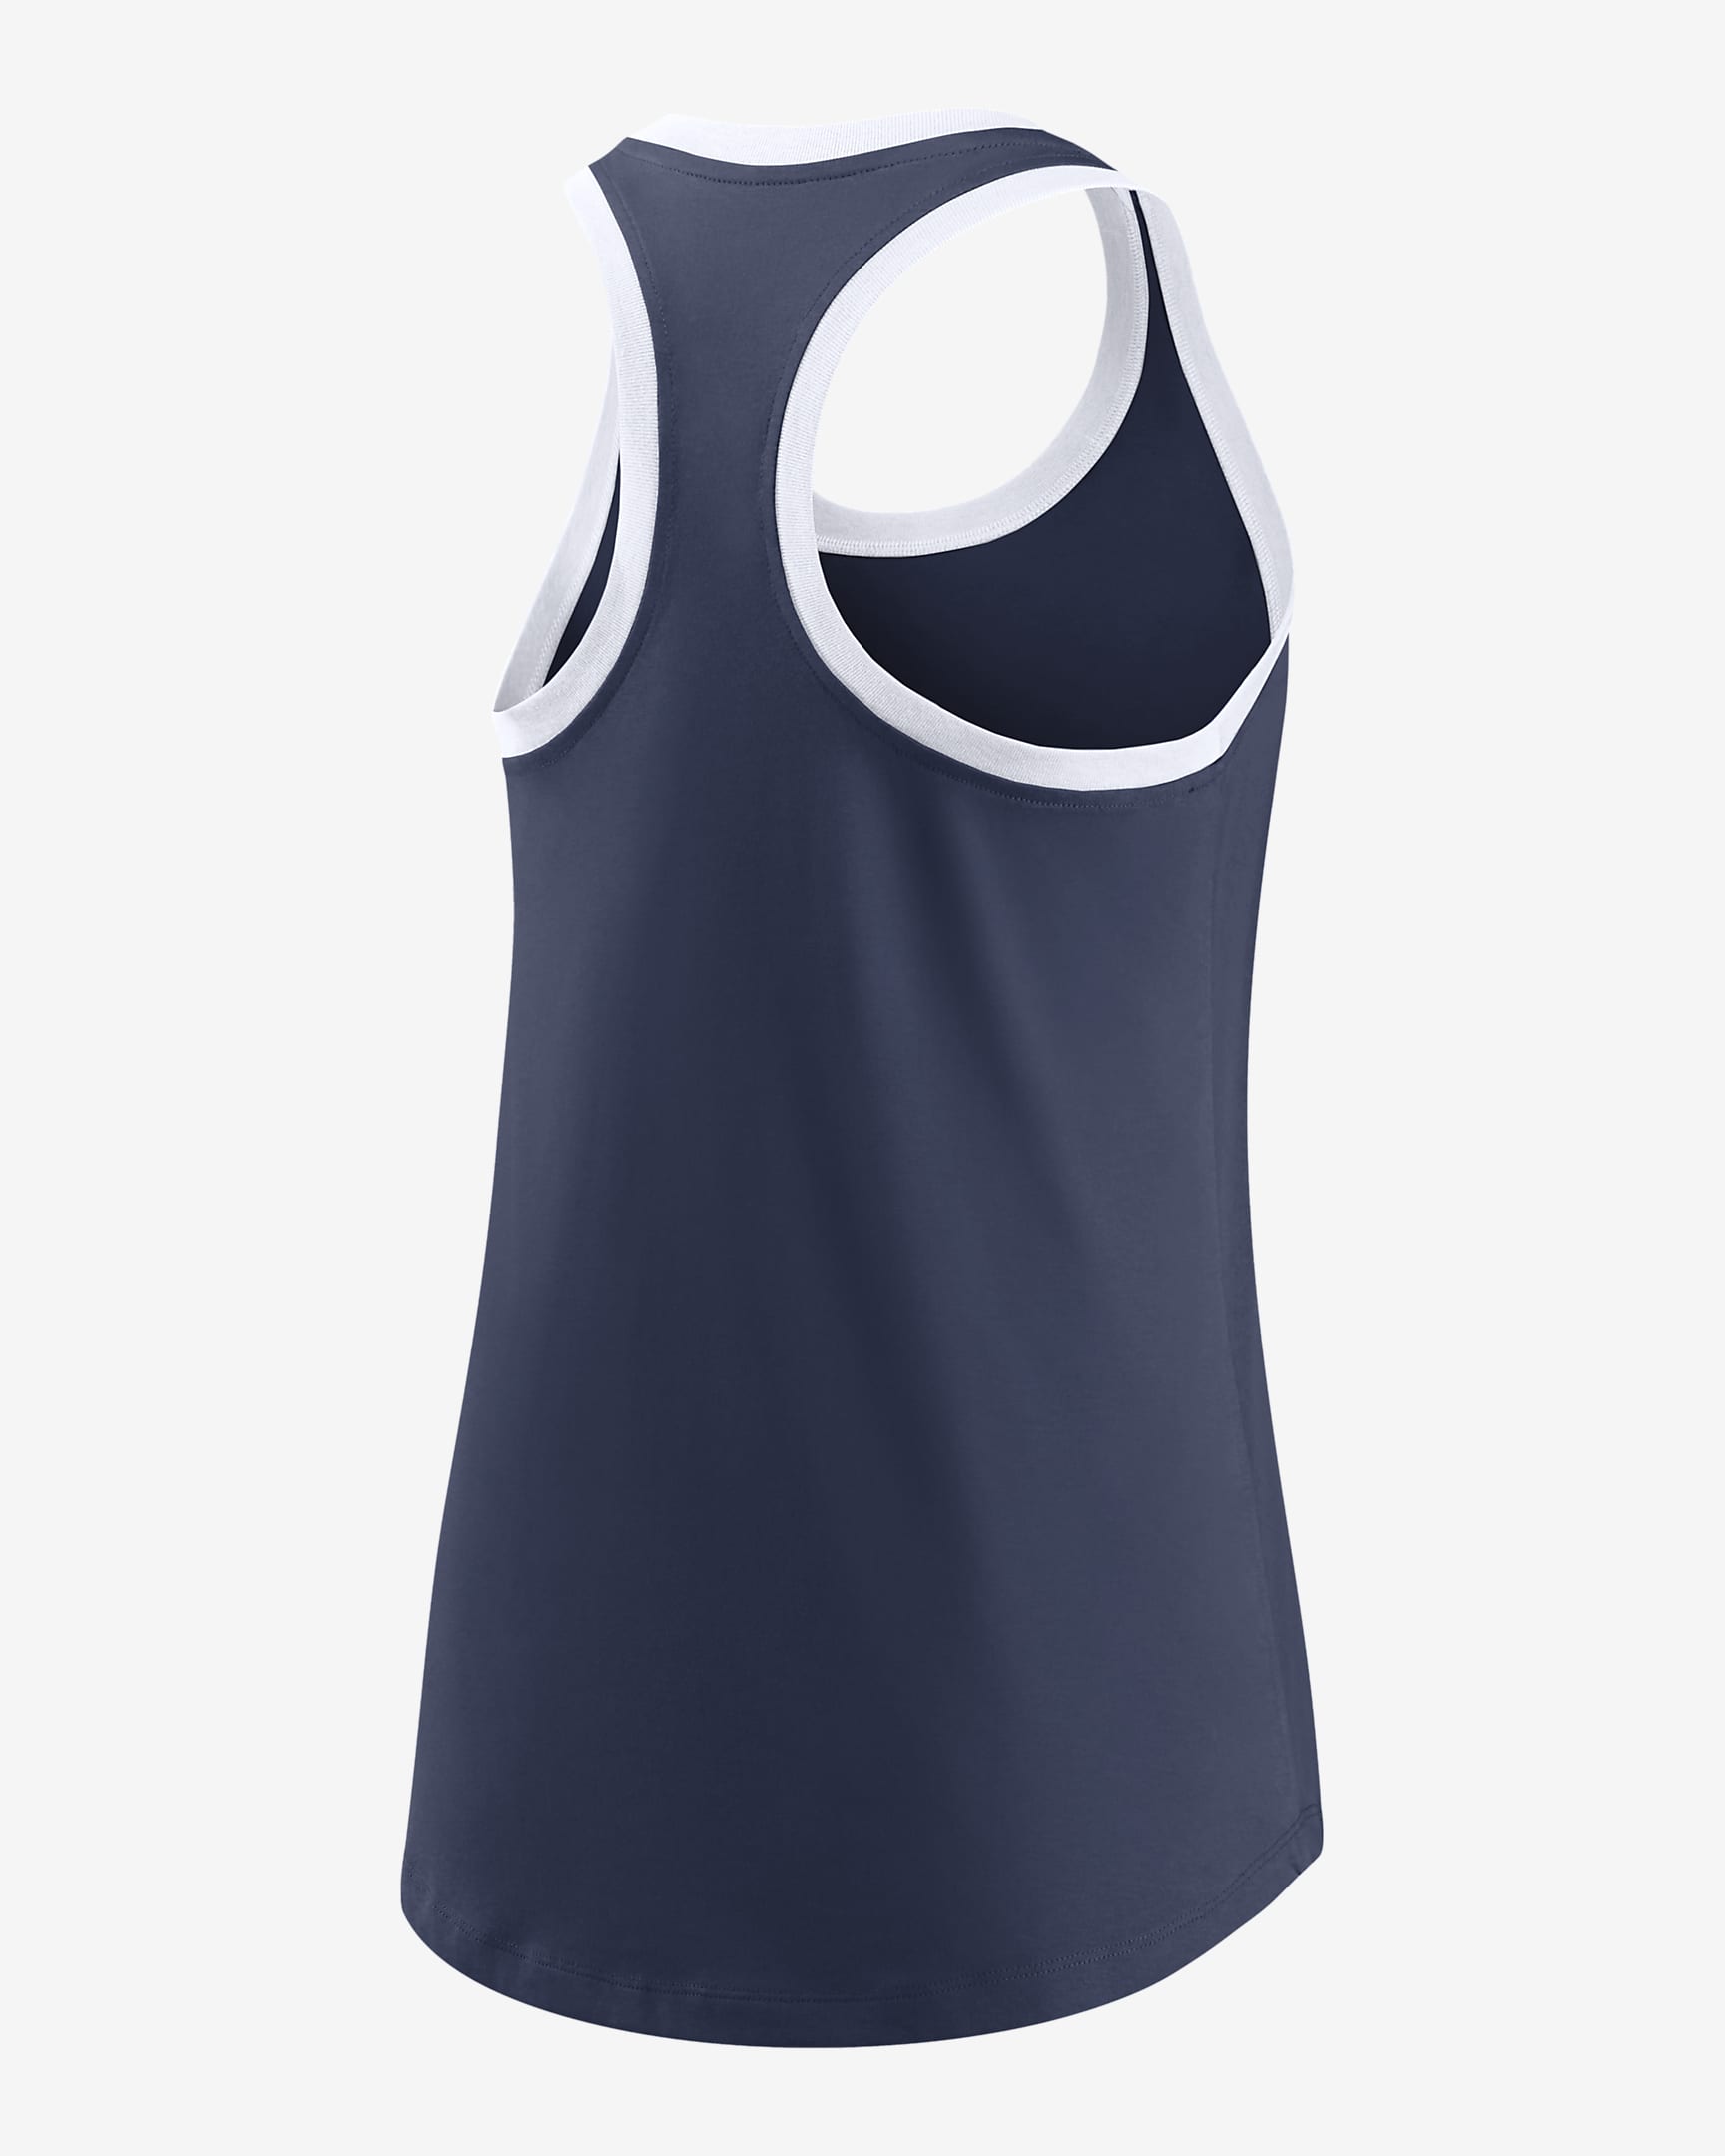 Camiseta de tirantes con espalda deportiva para mujer Nike Team Tech ...